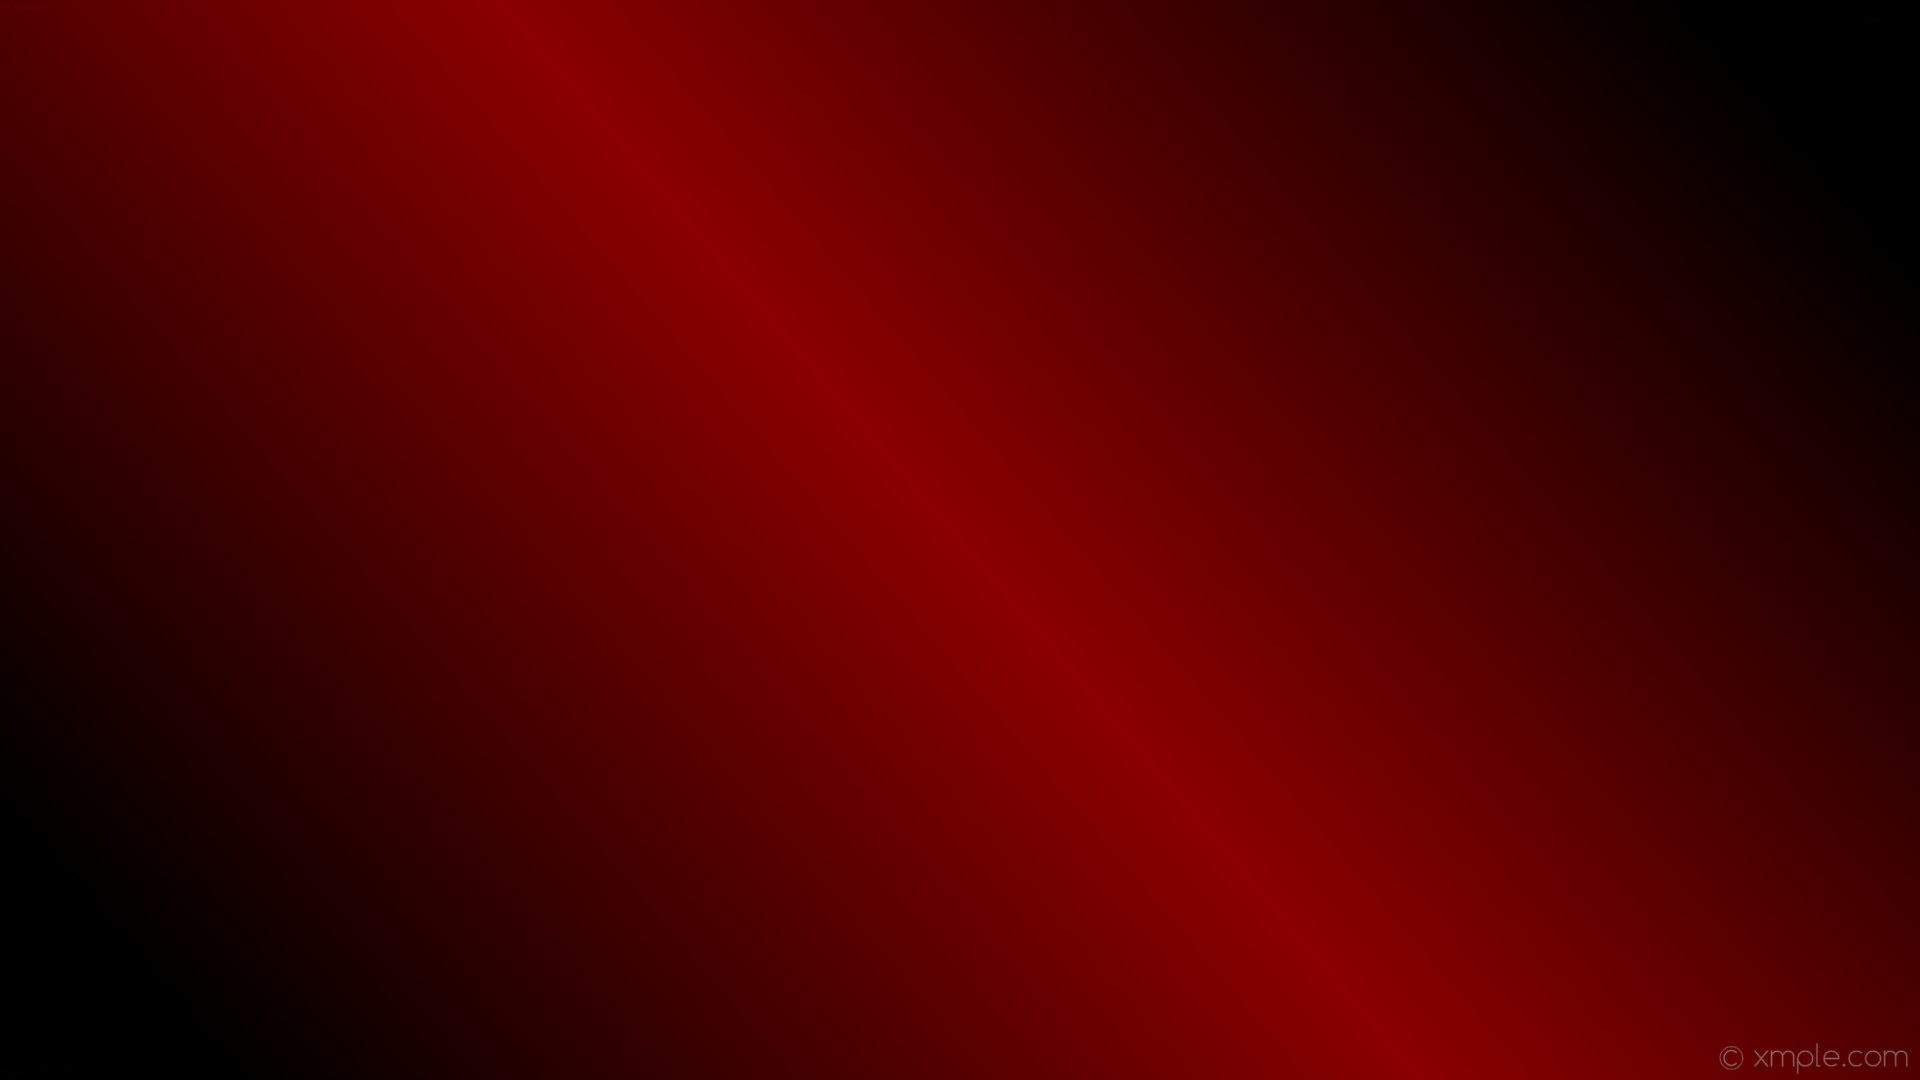 1920x1080 wallpaper linear red black gradient highlight dark red #000000 #8b0000 195Â°  50%